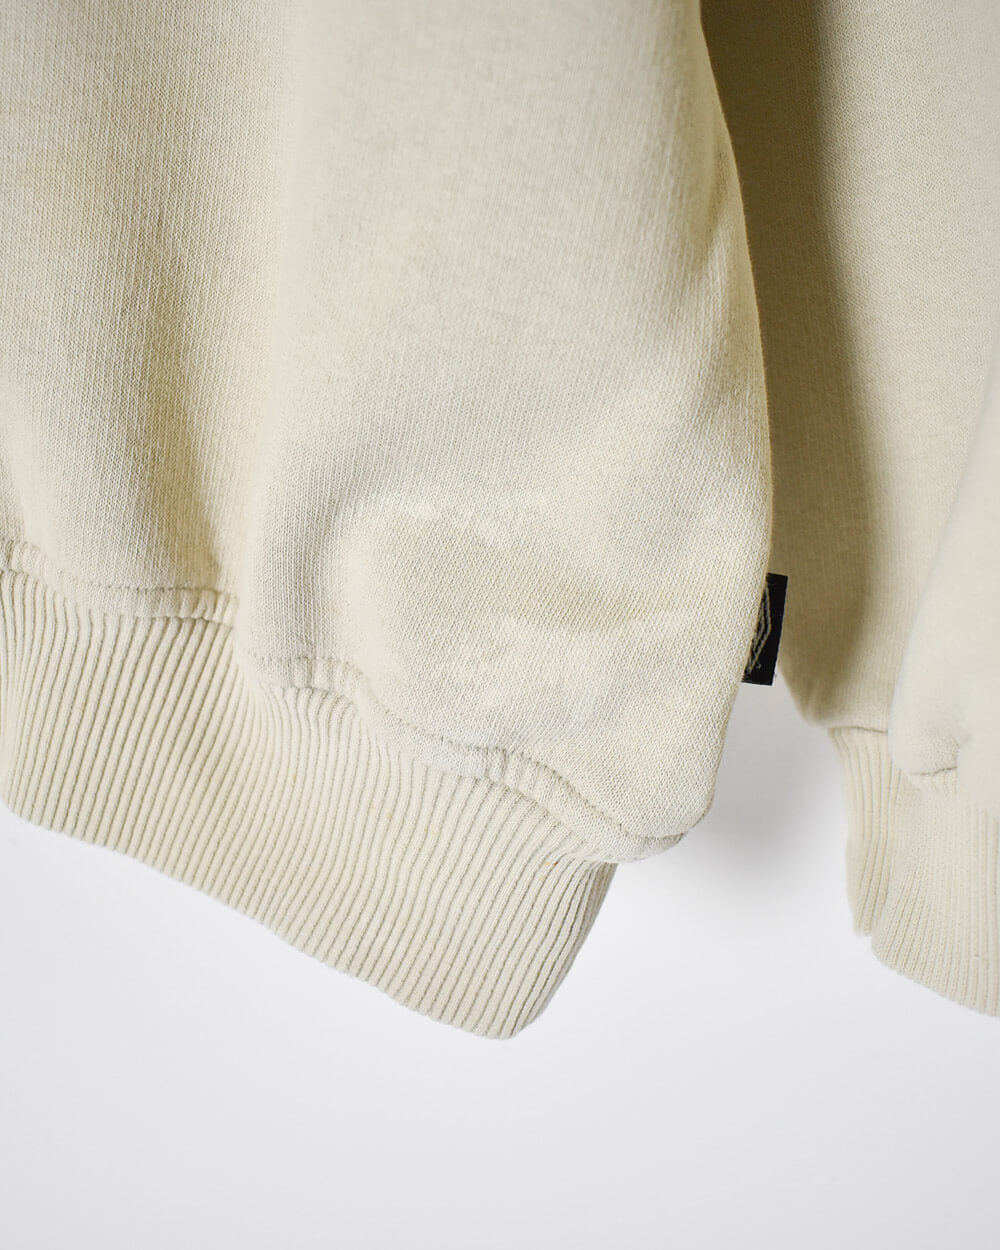 Neutral Umbro Sweatshirt - Medium